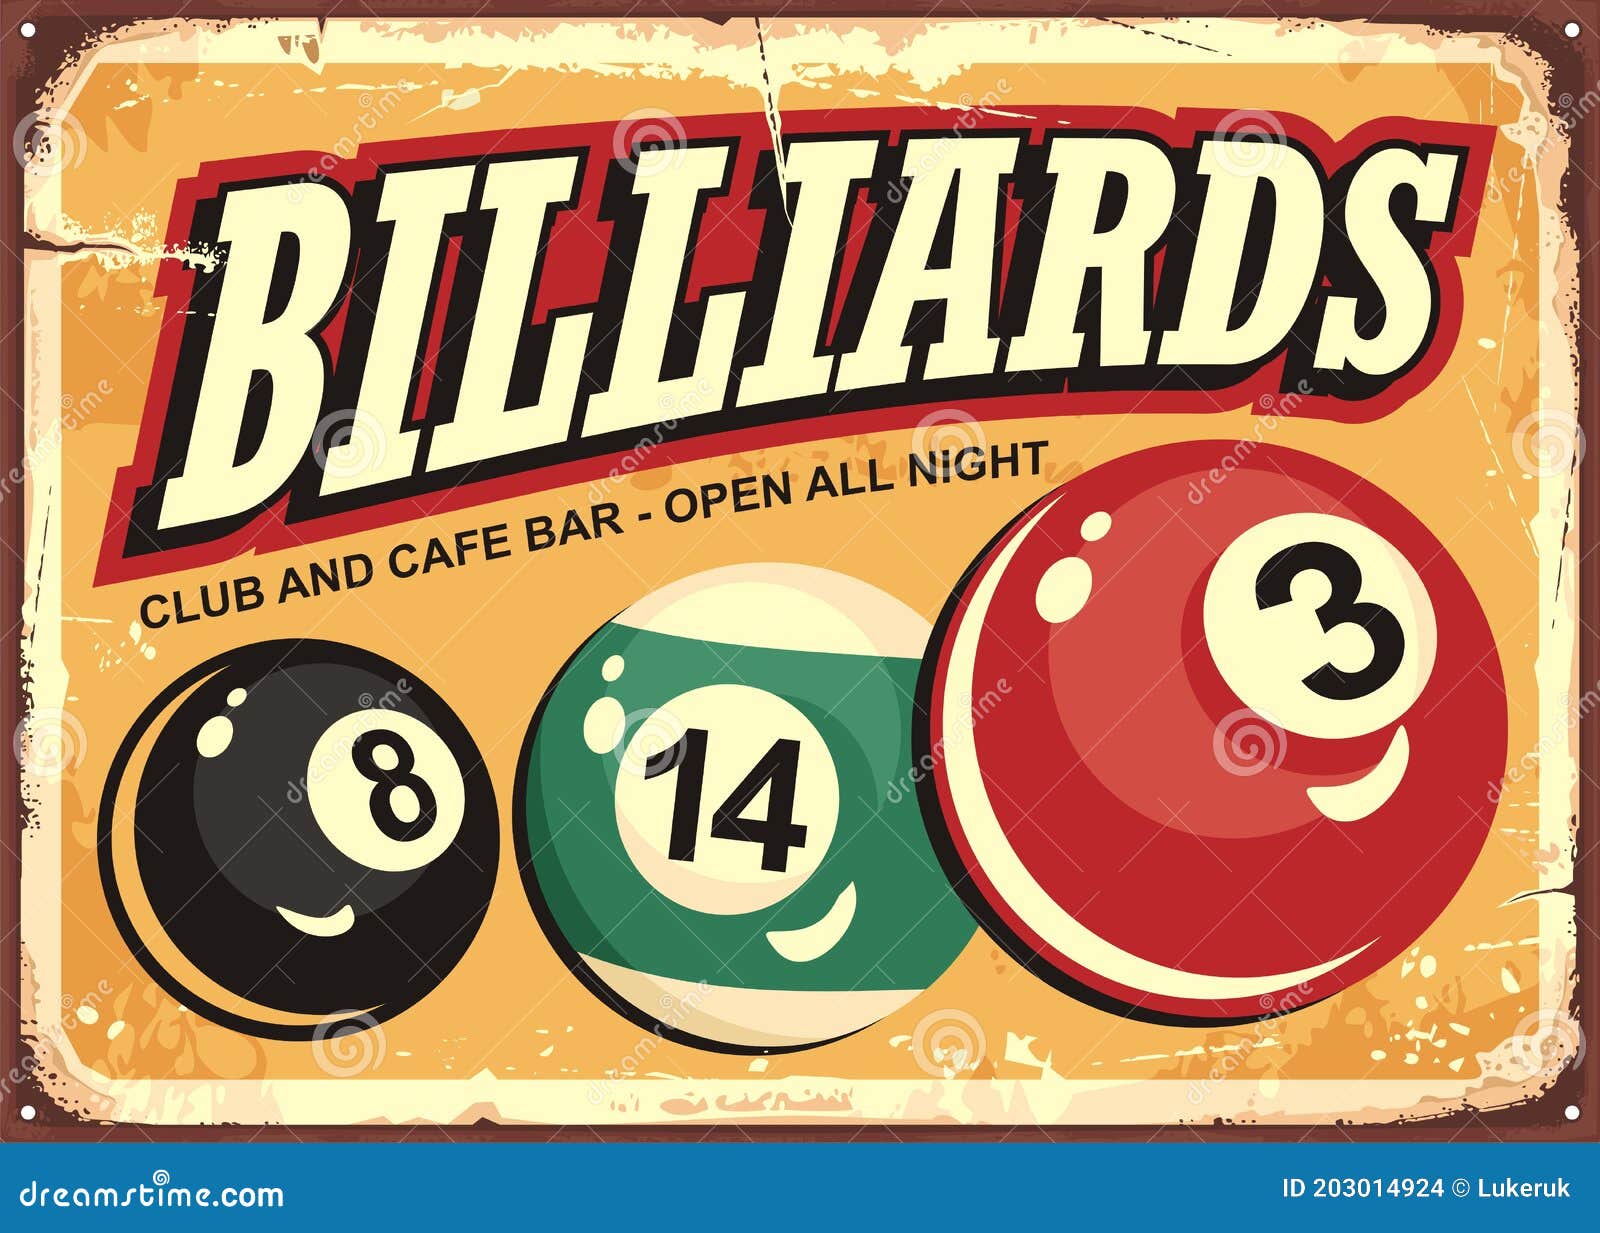 billiard club and cafe bar retro sign idea